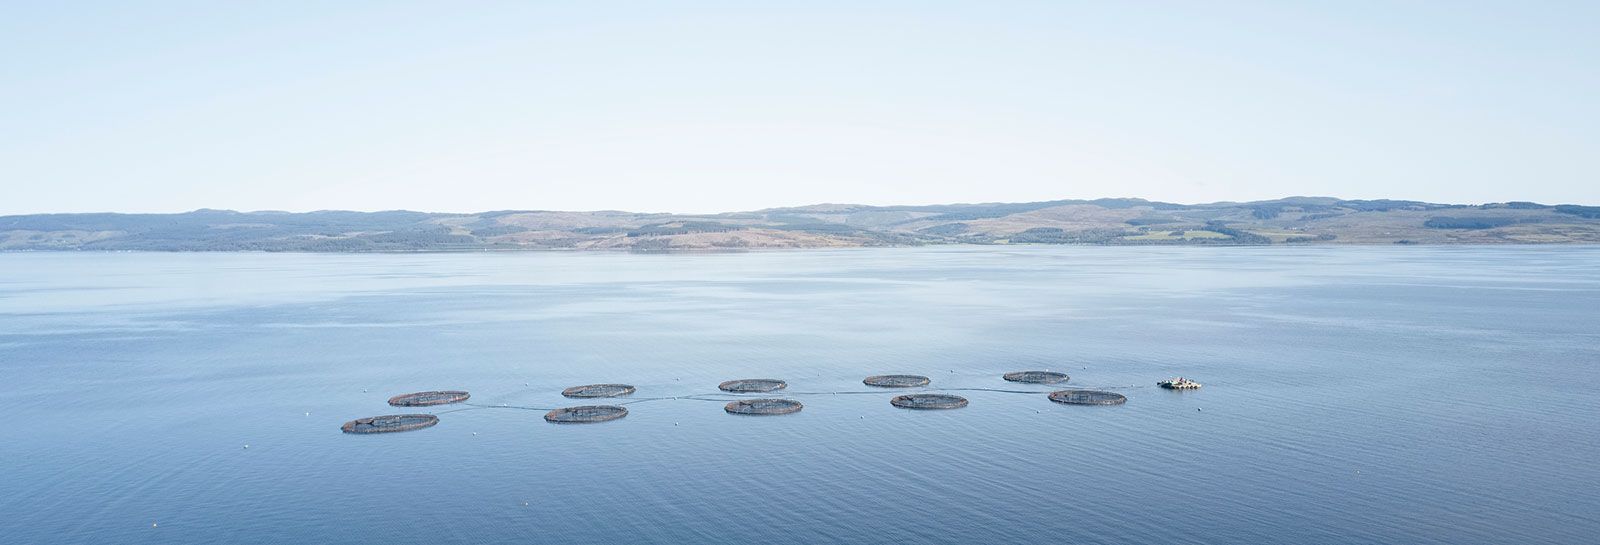 Fish farm at Loch Awe banner image